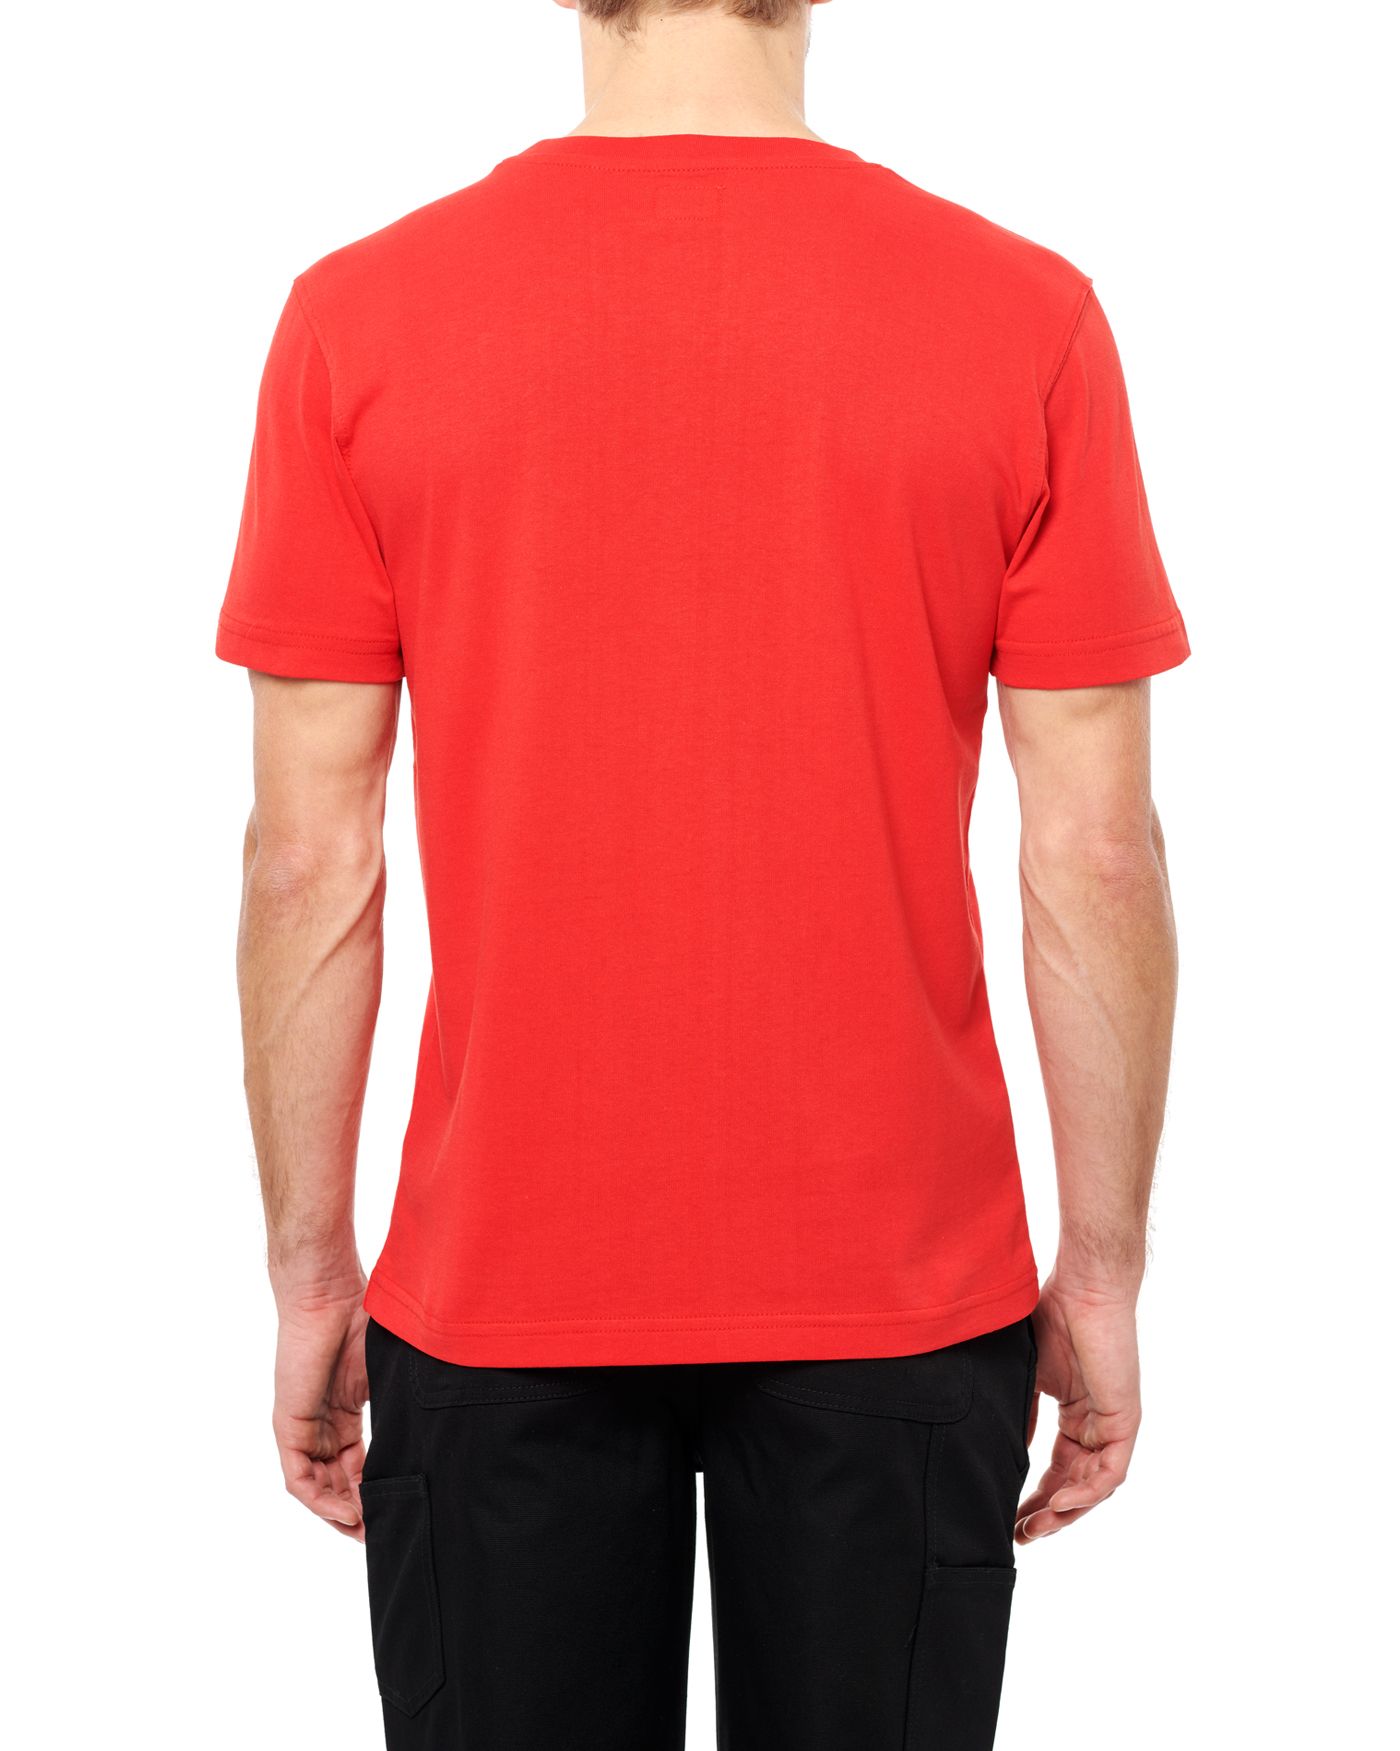 Photo of Bob Cat S/S T-shirt, Red